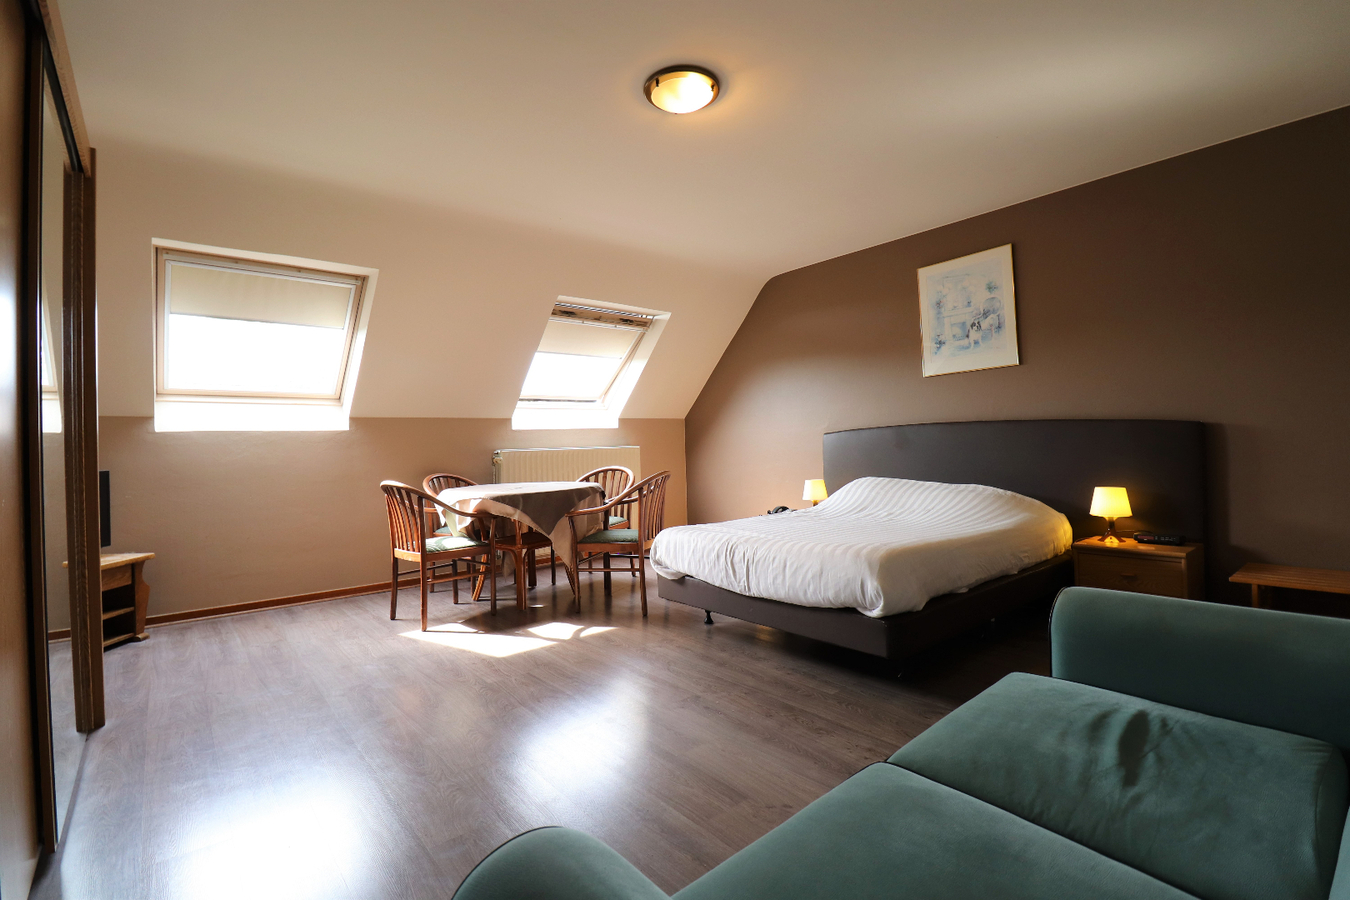 Prachtig hotel met 7 kamers, brasserie en priv&#233; appartement gelegen te Lommel 